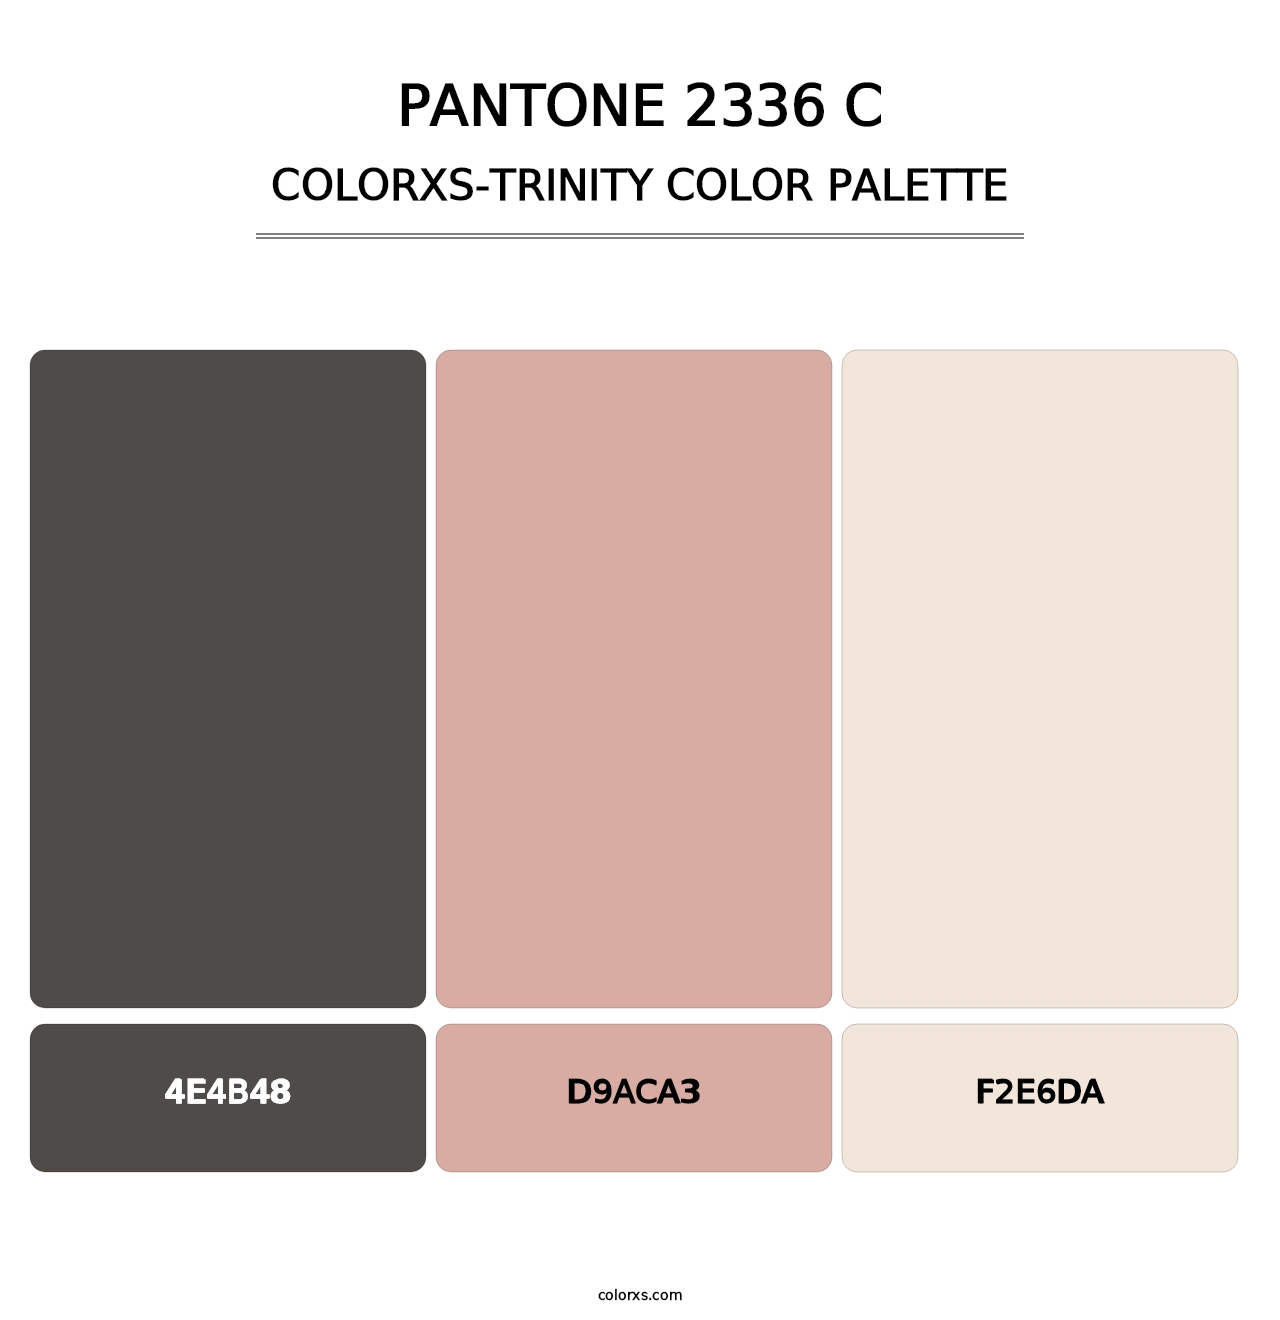 PANTONE 2336 C - Colorxs Trinity Palette